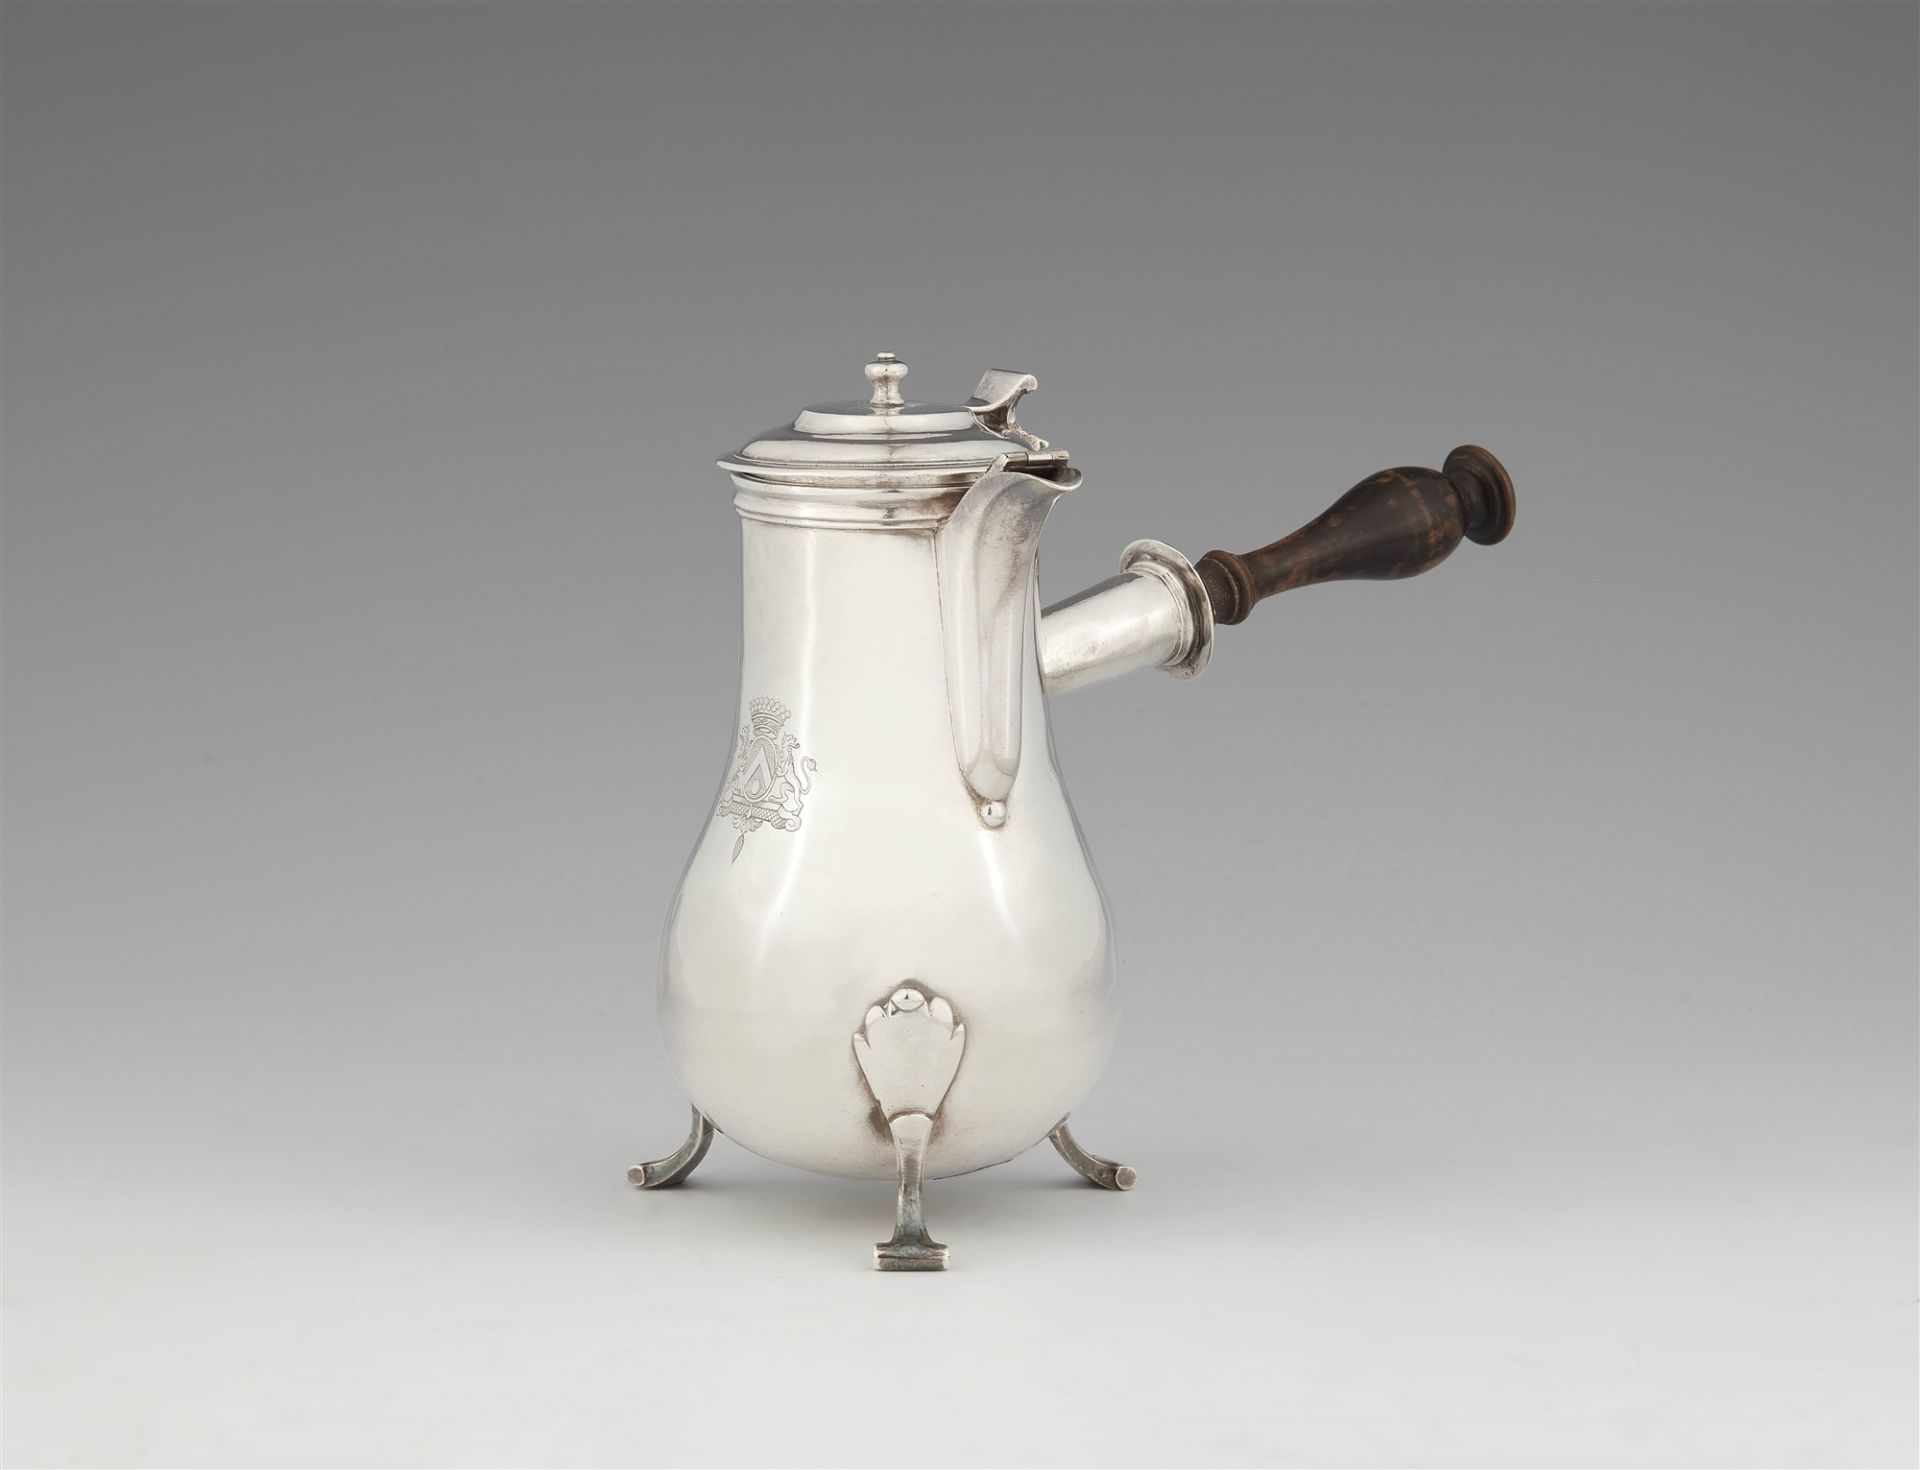 A French silver jug